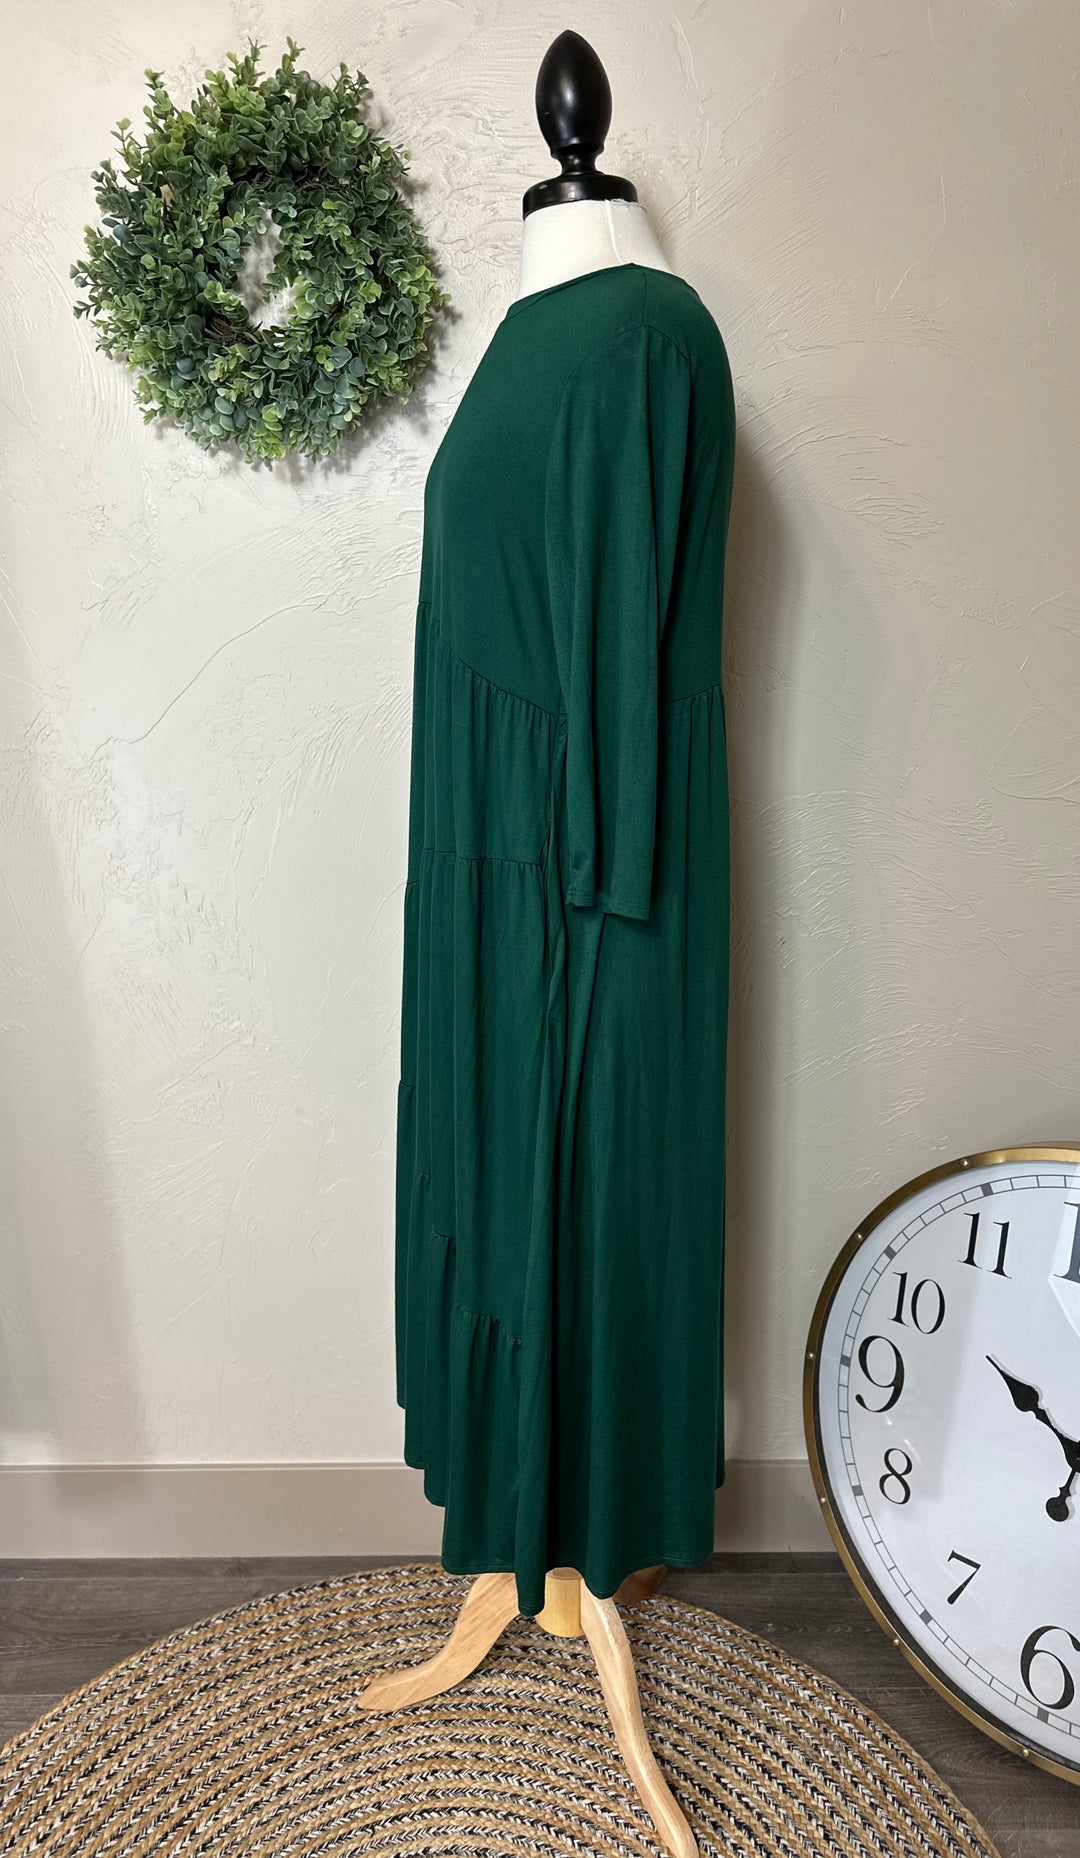 Liza Lou's Hunter Green Asymmetric Tiered Dress